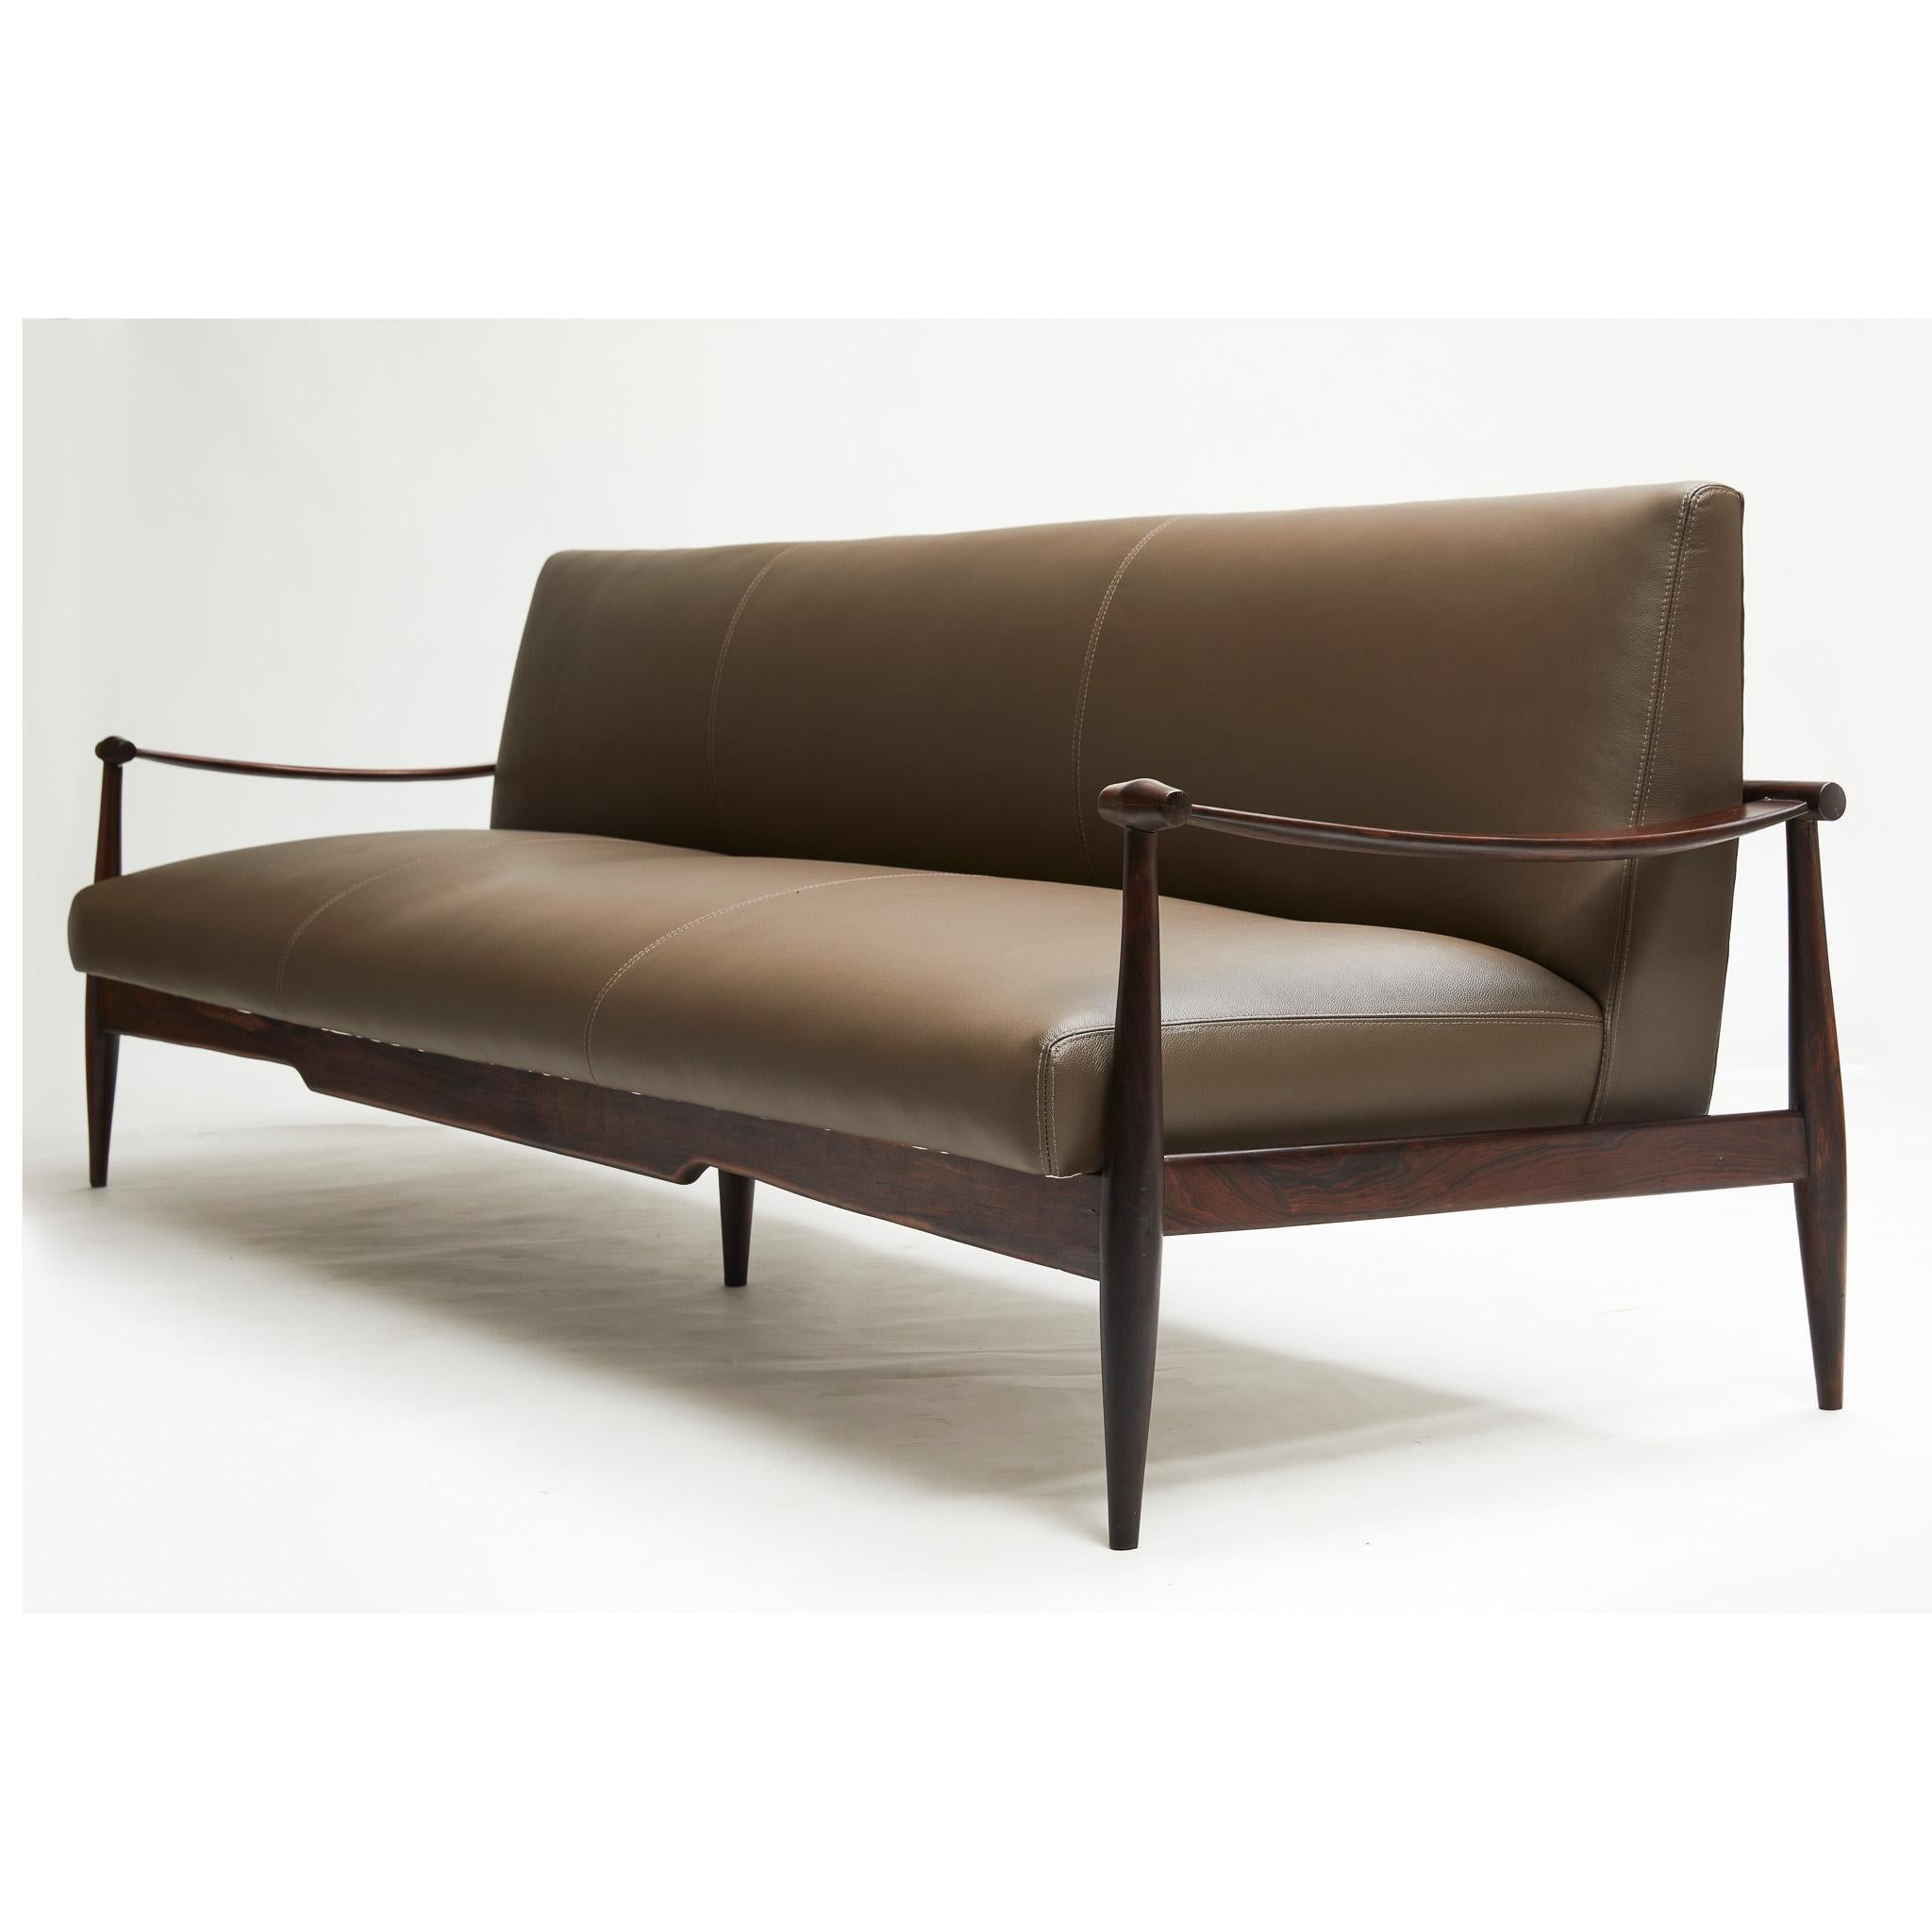 Mid-Century Modern Brazilian Modern Sofa in Hardwood &Brown Leather by Liceu De Artes 1960